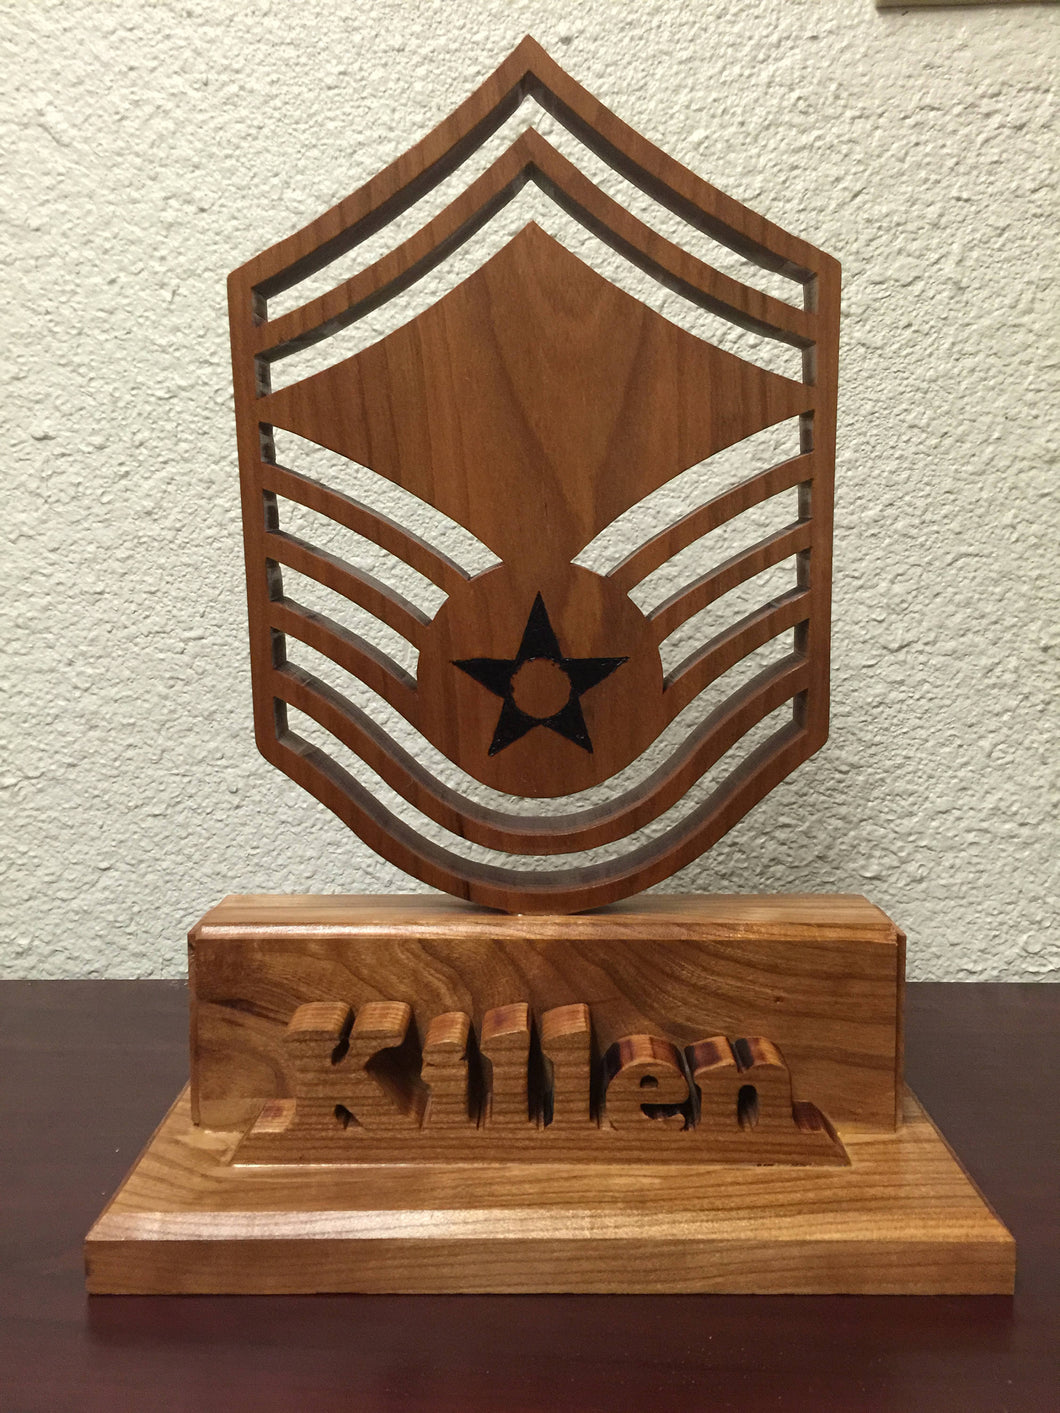 Military Rank Display - Name Display - Military Wood Rank Display - Military Promotion - Military Rank - Rank Display - Military Gift